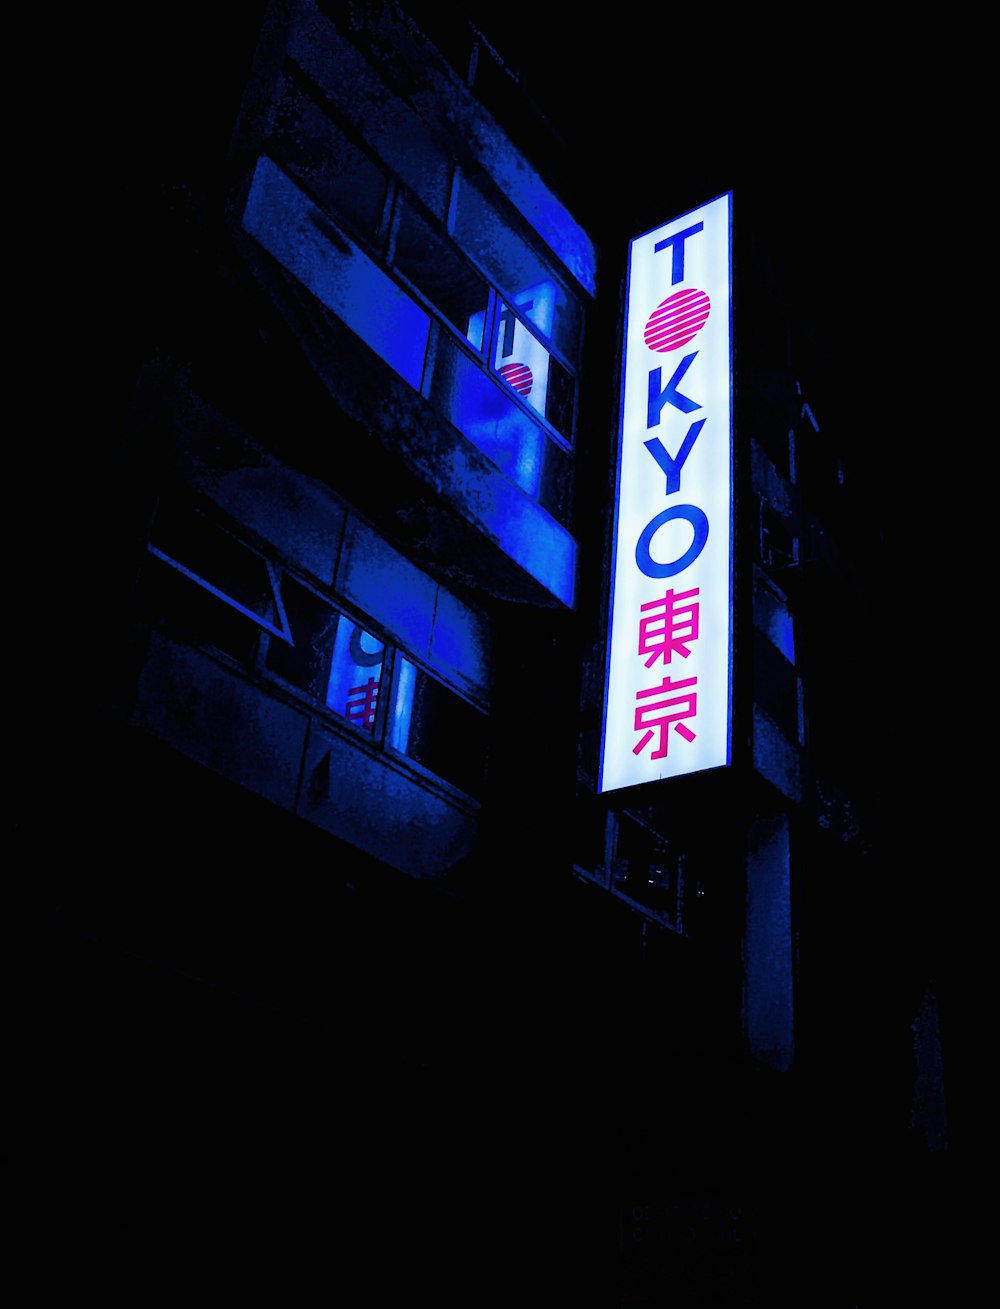 Tokyo signage